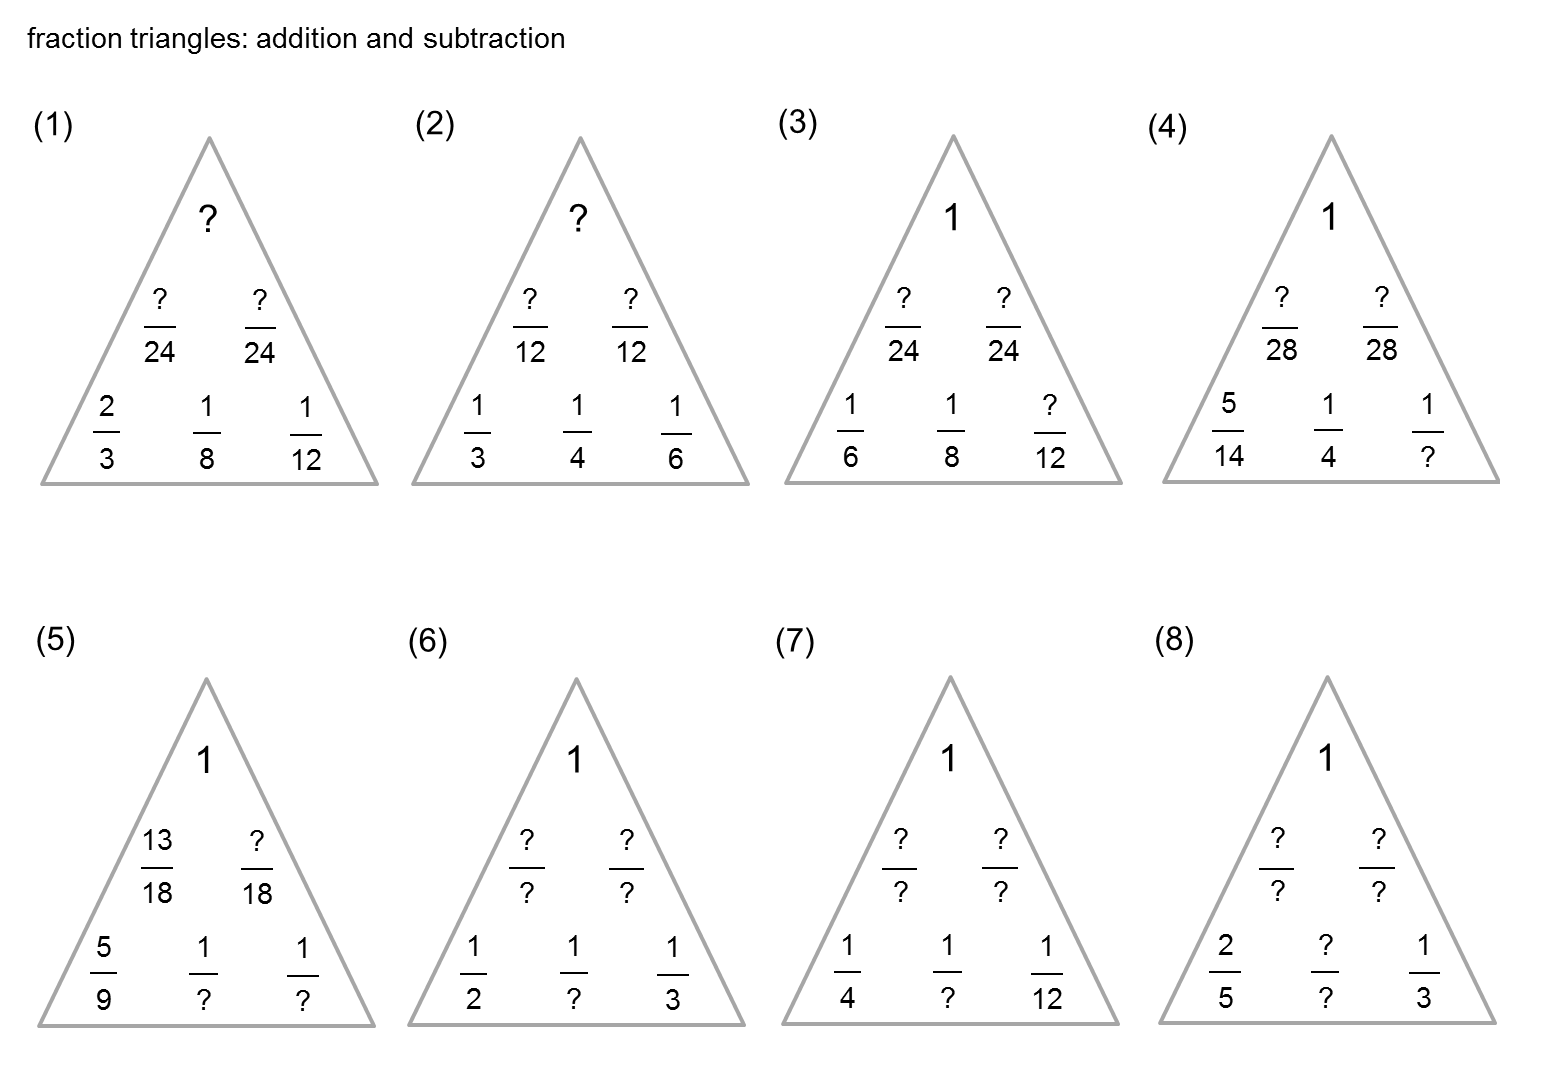 median-don-steward-mathematics-teaching-fraction-triangles